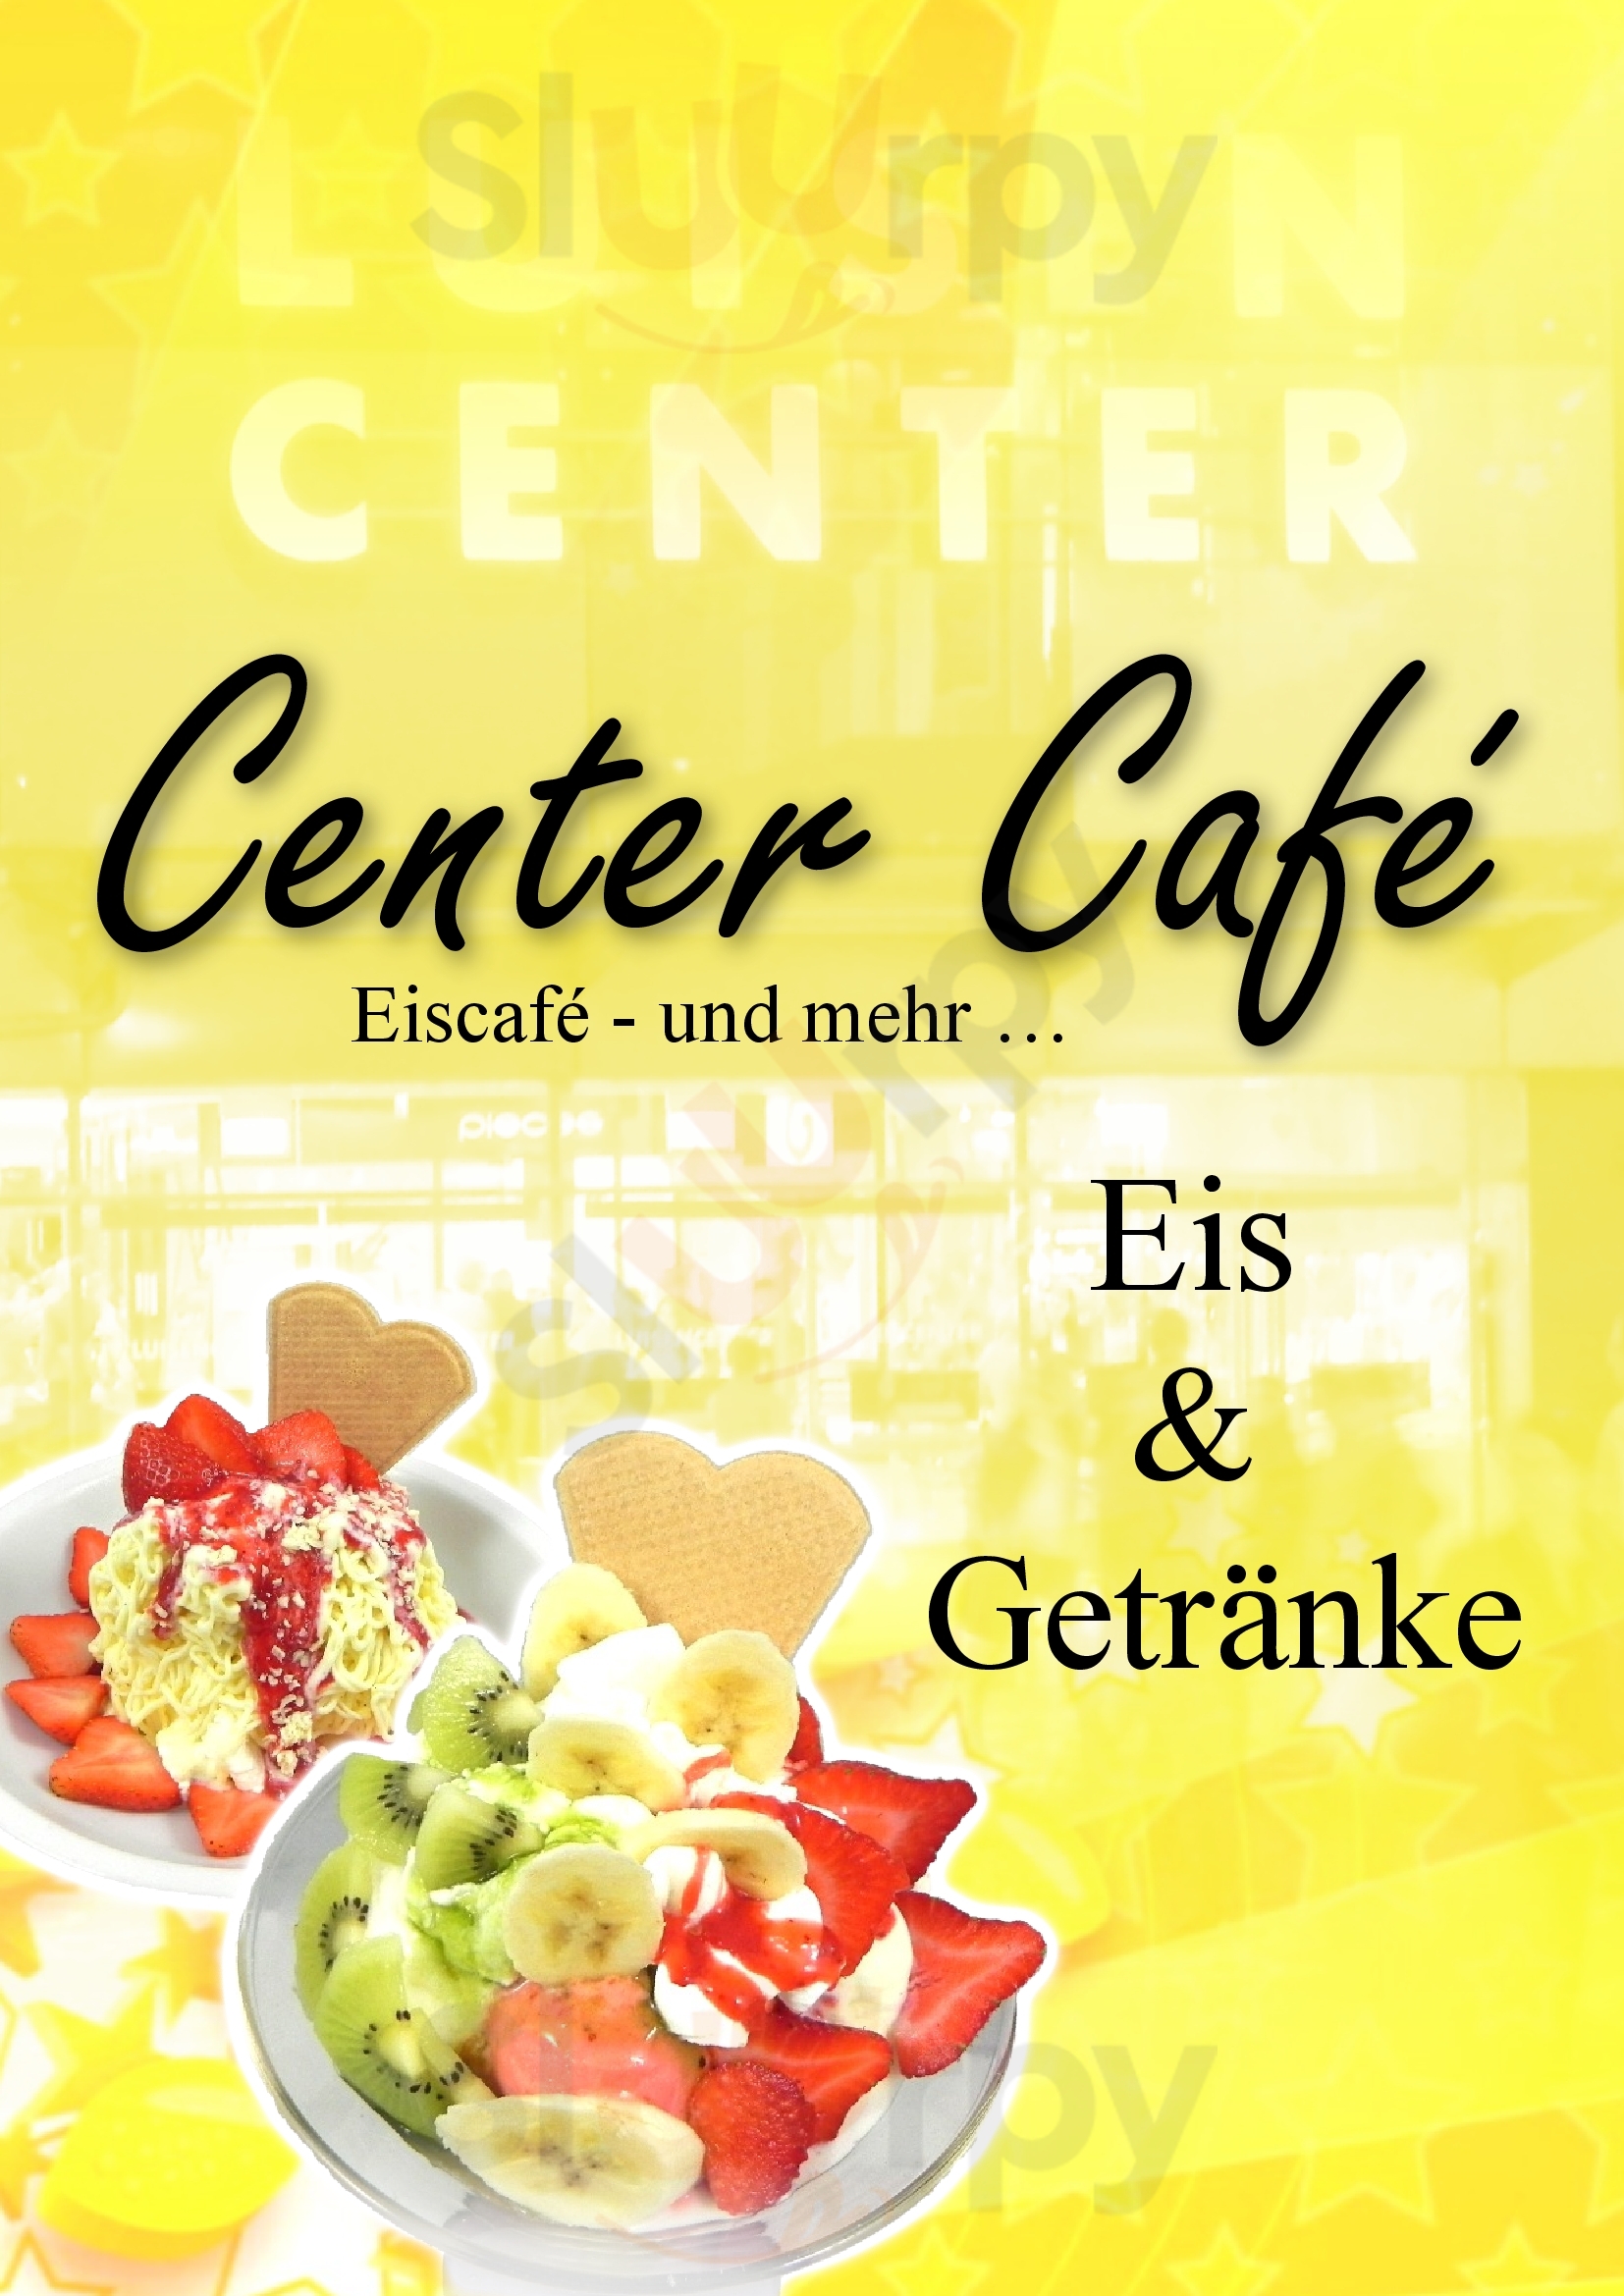 Center Cafe Darmstadt Menu - 1